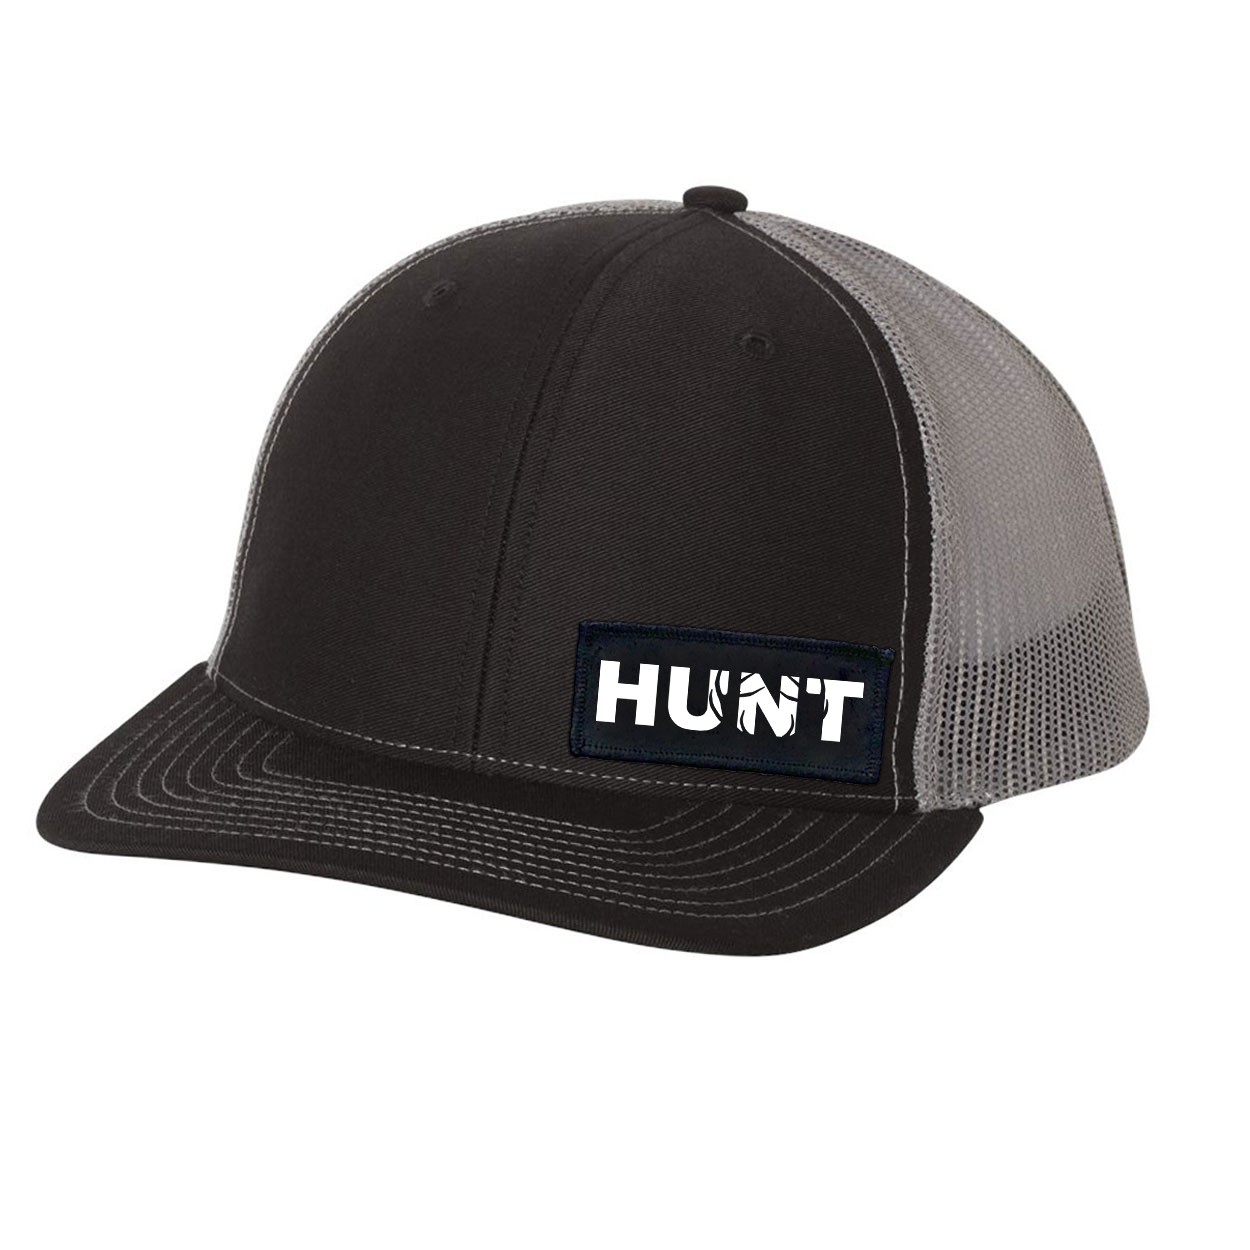 Hunt Rack Logo Night Out Woven Patch Snapback Trucker Hat Black/Gray (White Logo)